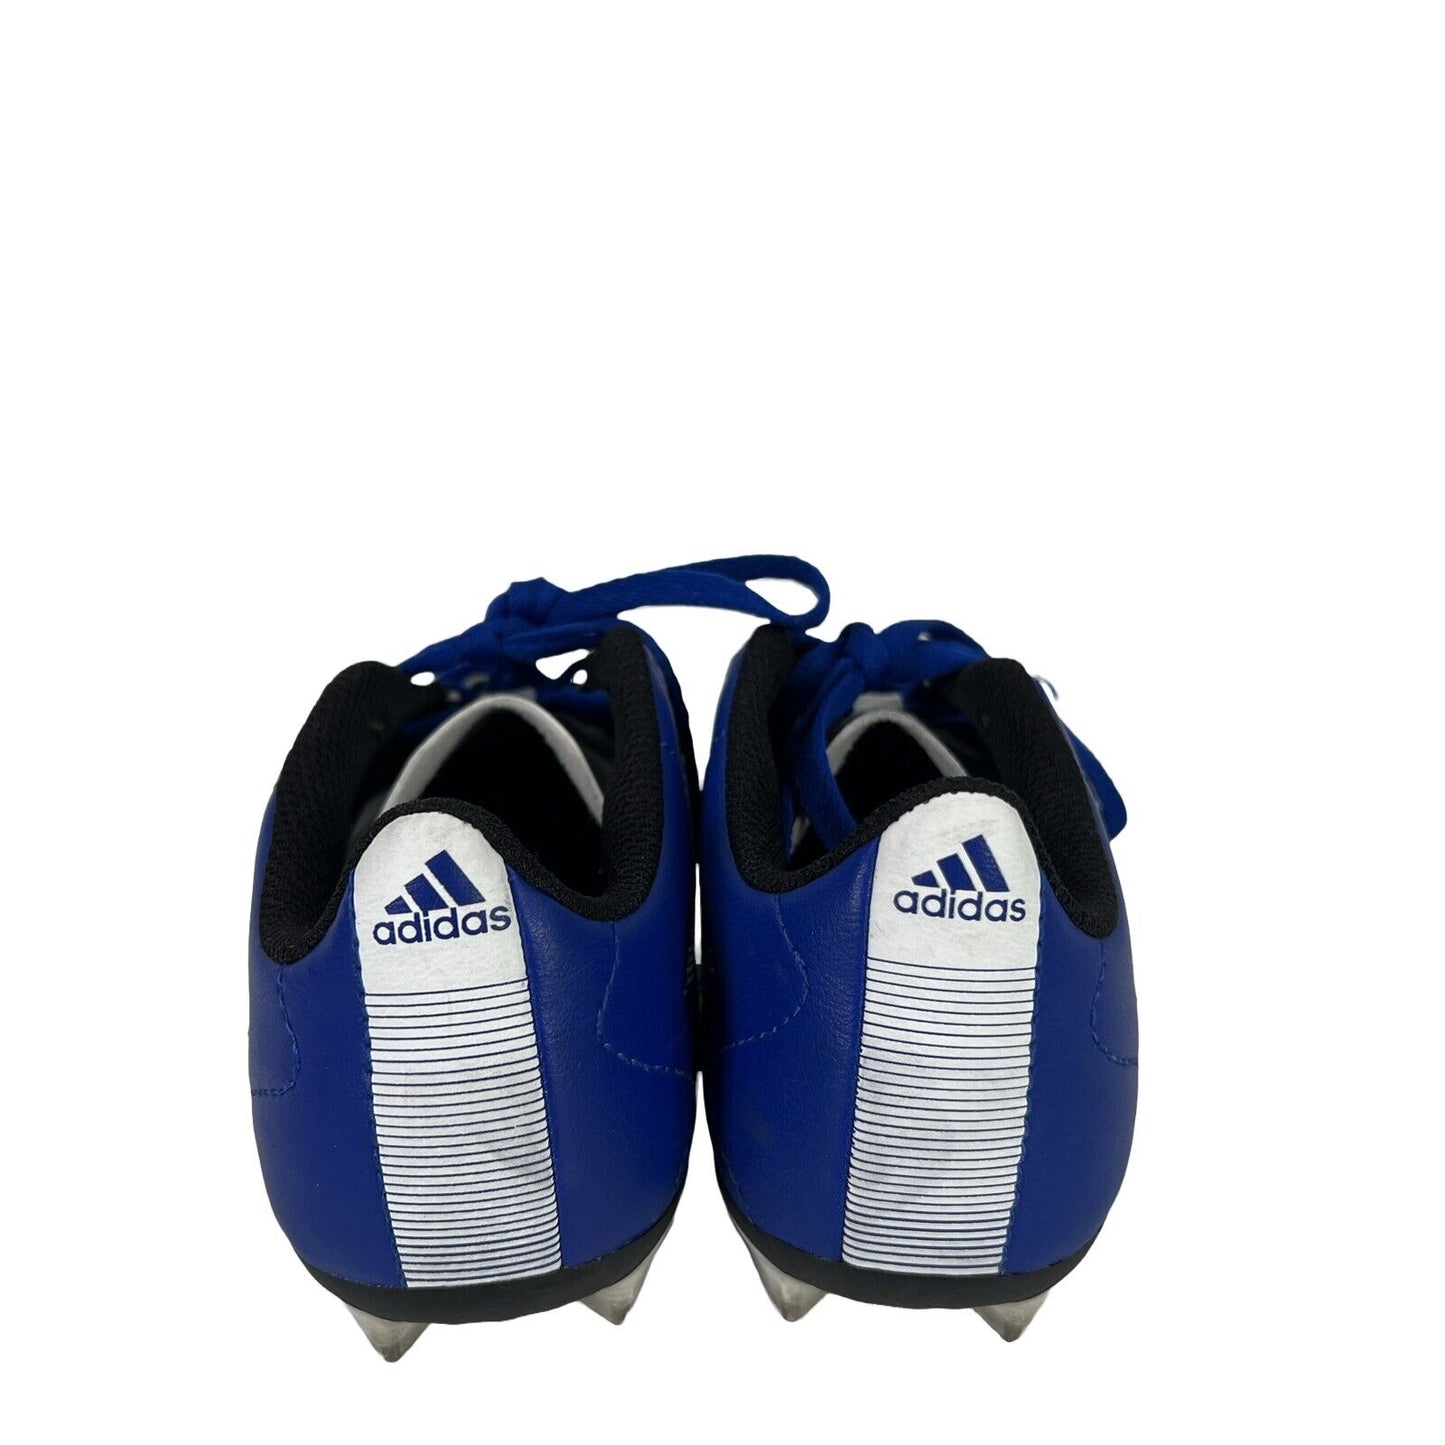 Adidas Boys Big Kids Blue Goletto VIII FG J Soccer Cleats Shoes - 1